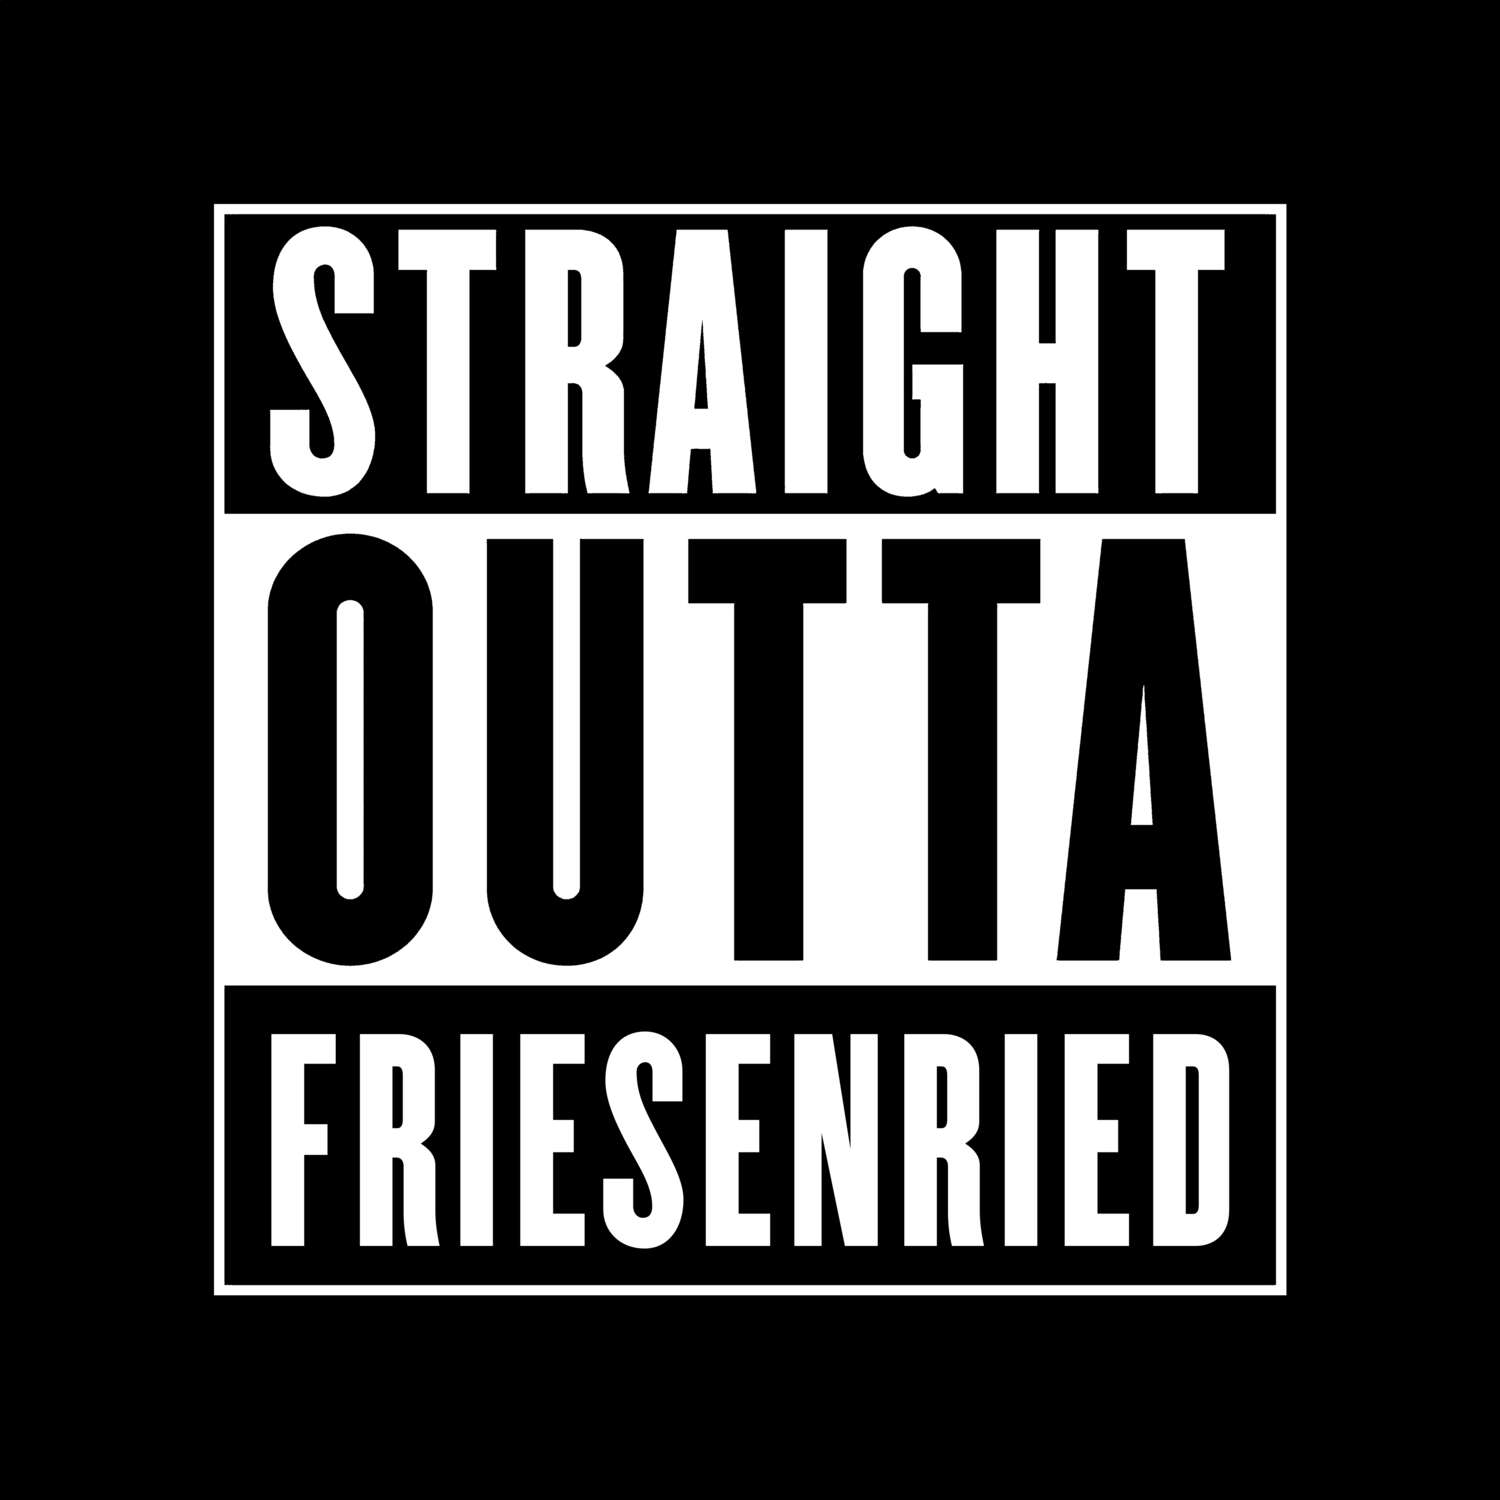 Friesenried T-Shirt »Straight Outta«